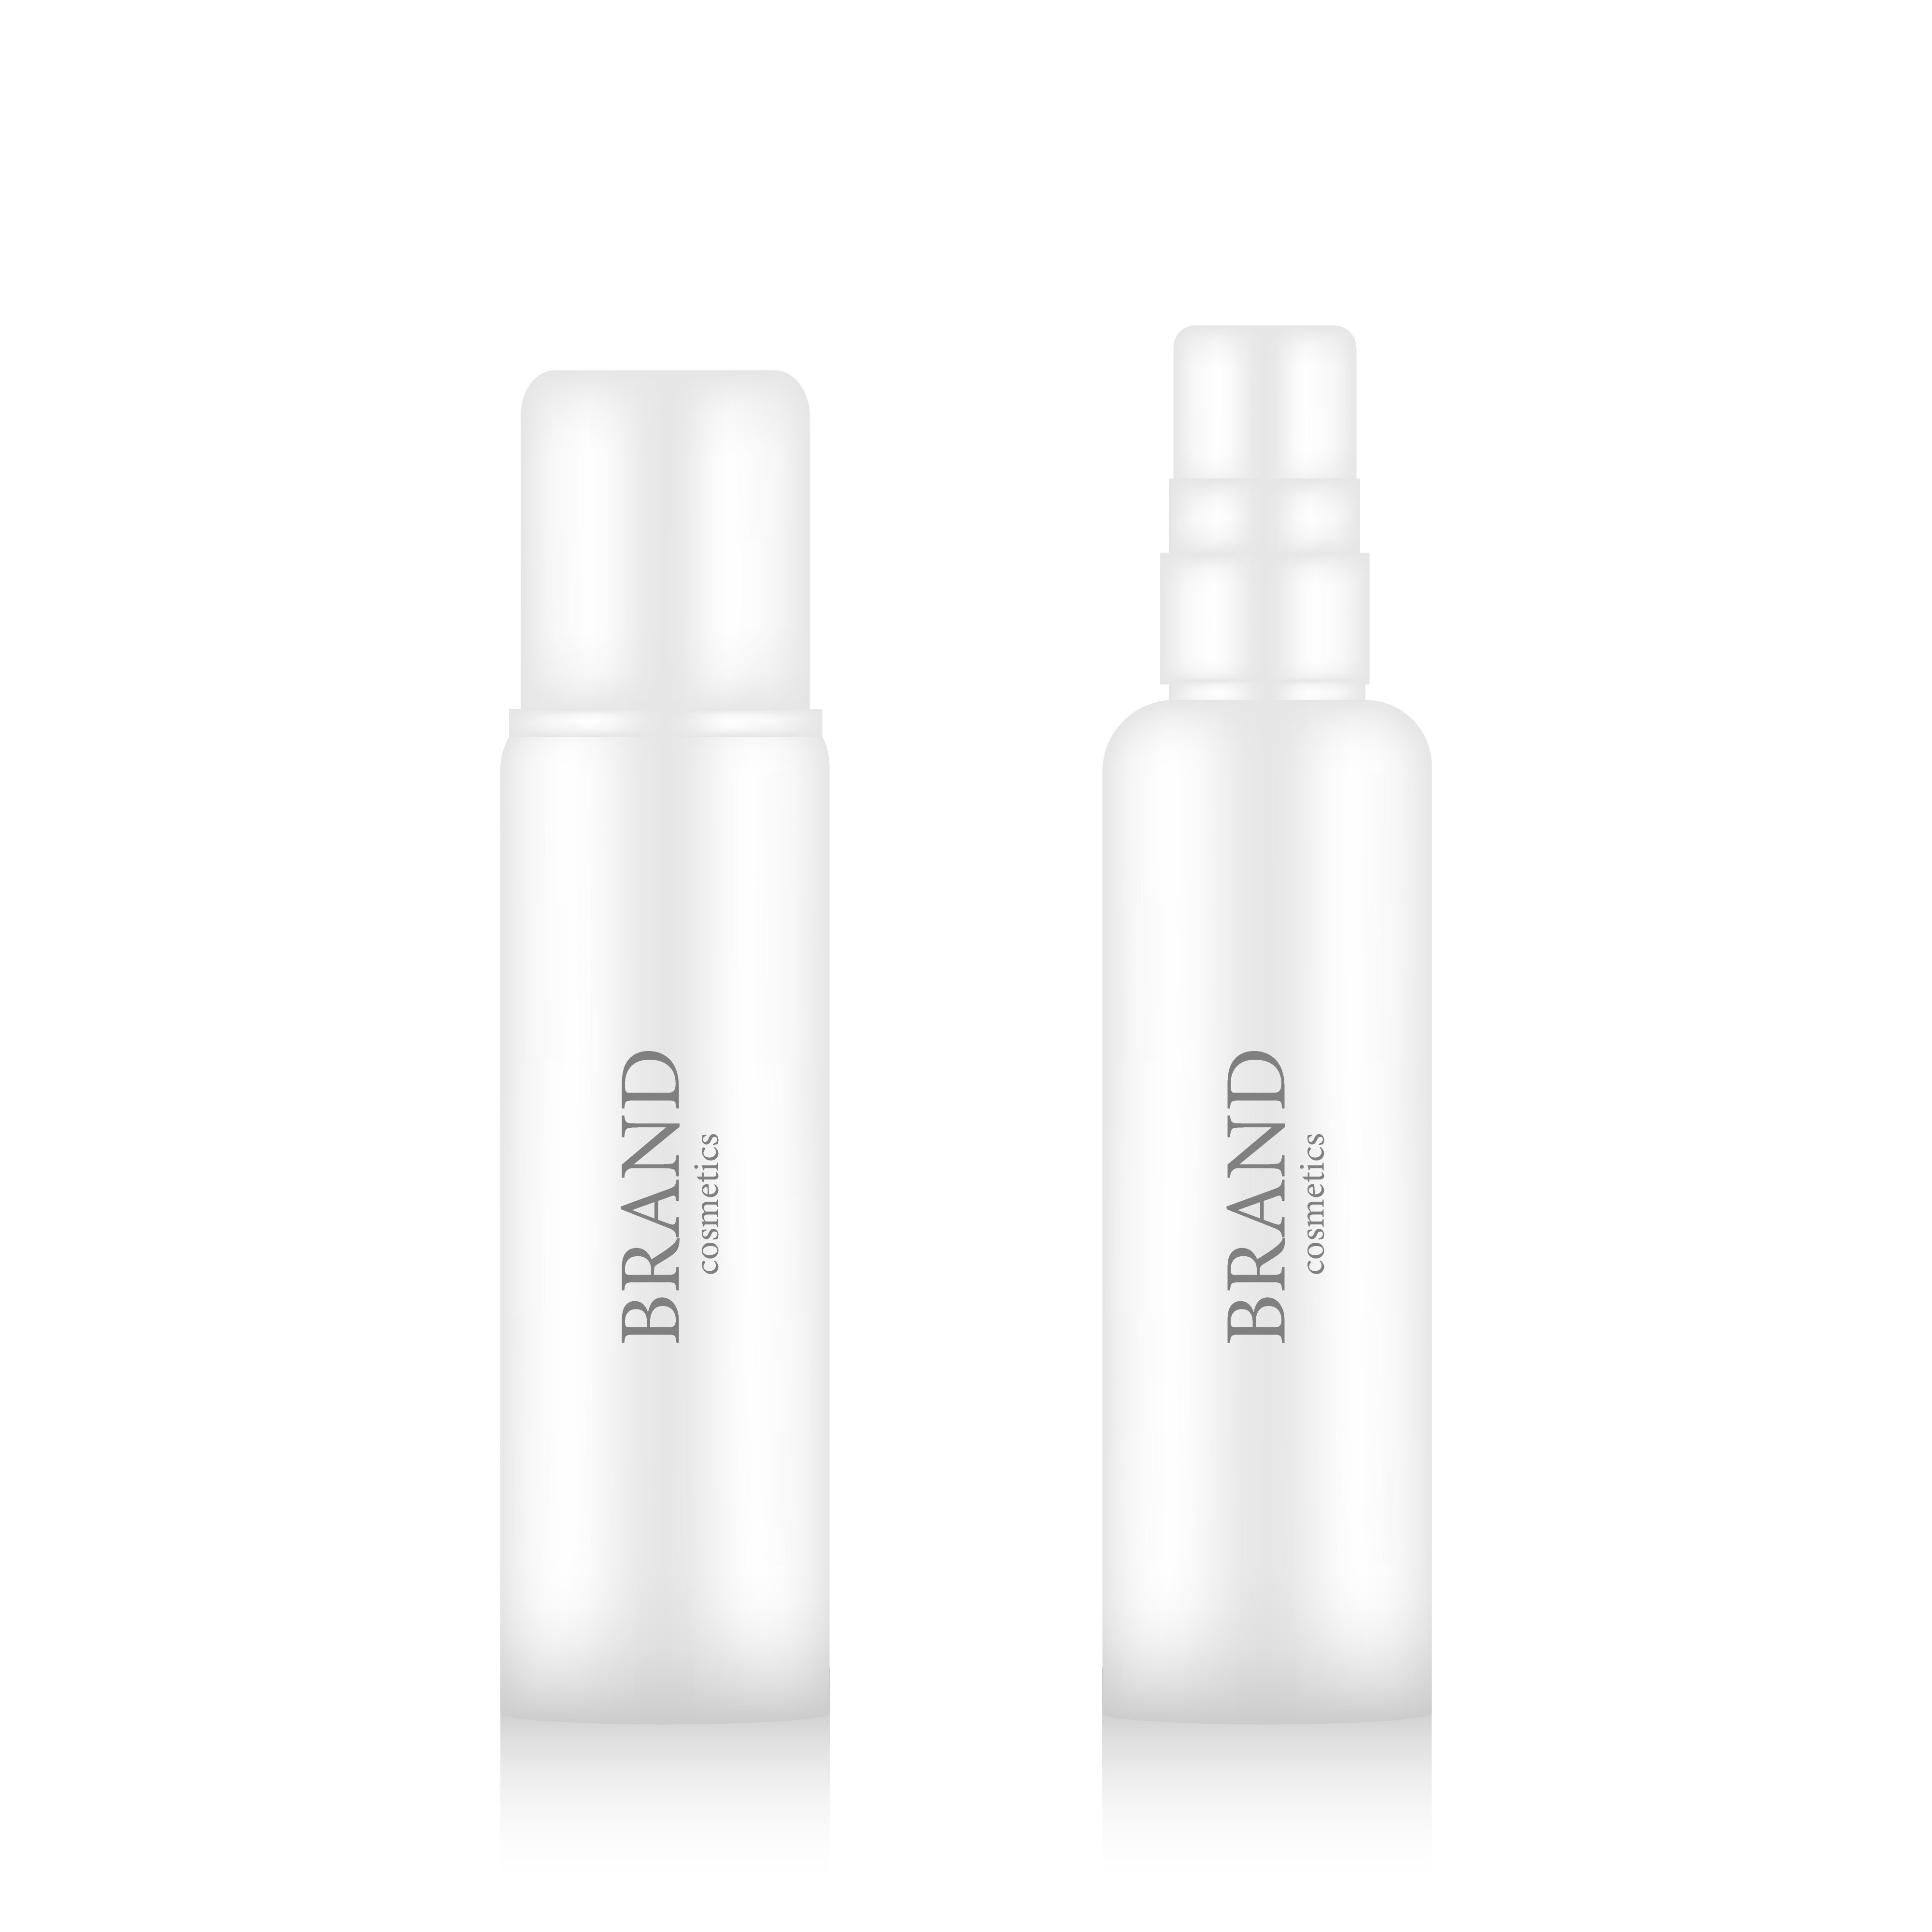 Download Realistic Brand Cosmetic Spray Bottle Mockup 1104786 Vector Art At Vecteezy